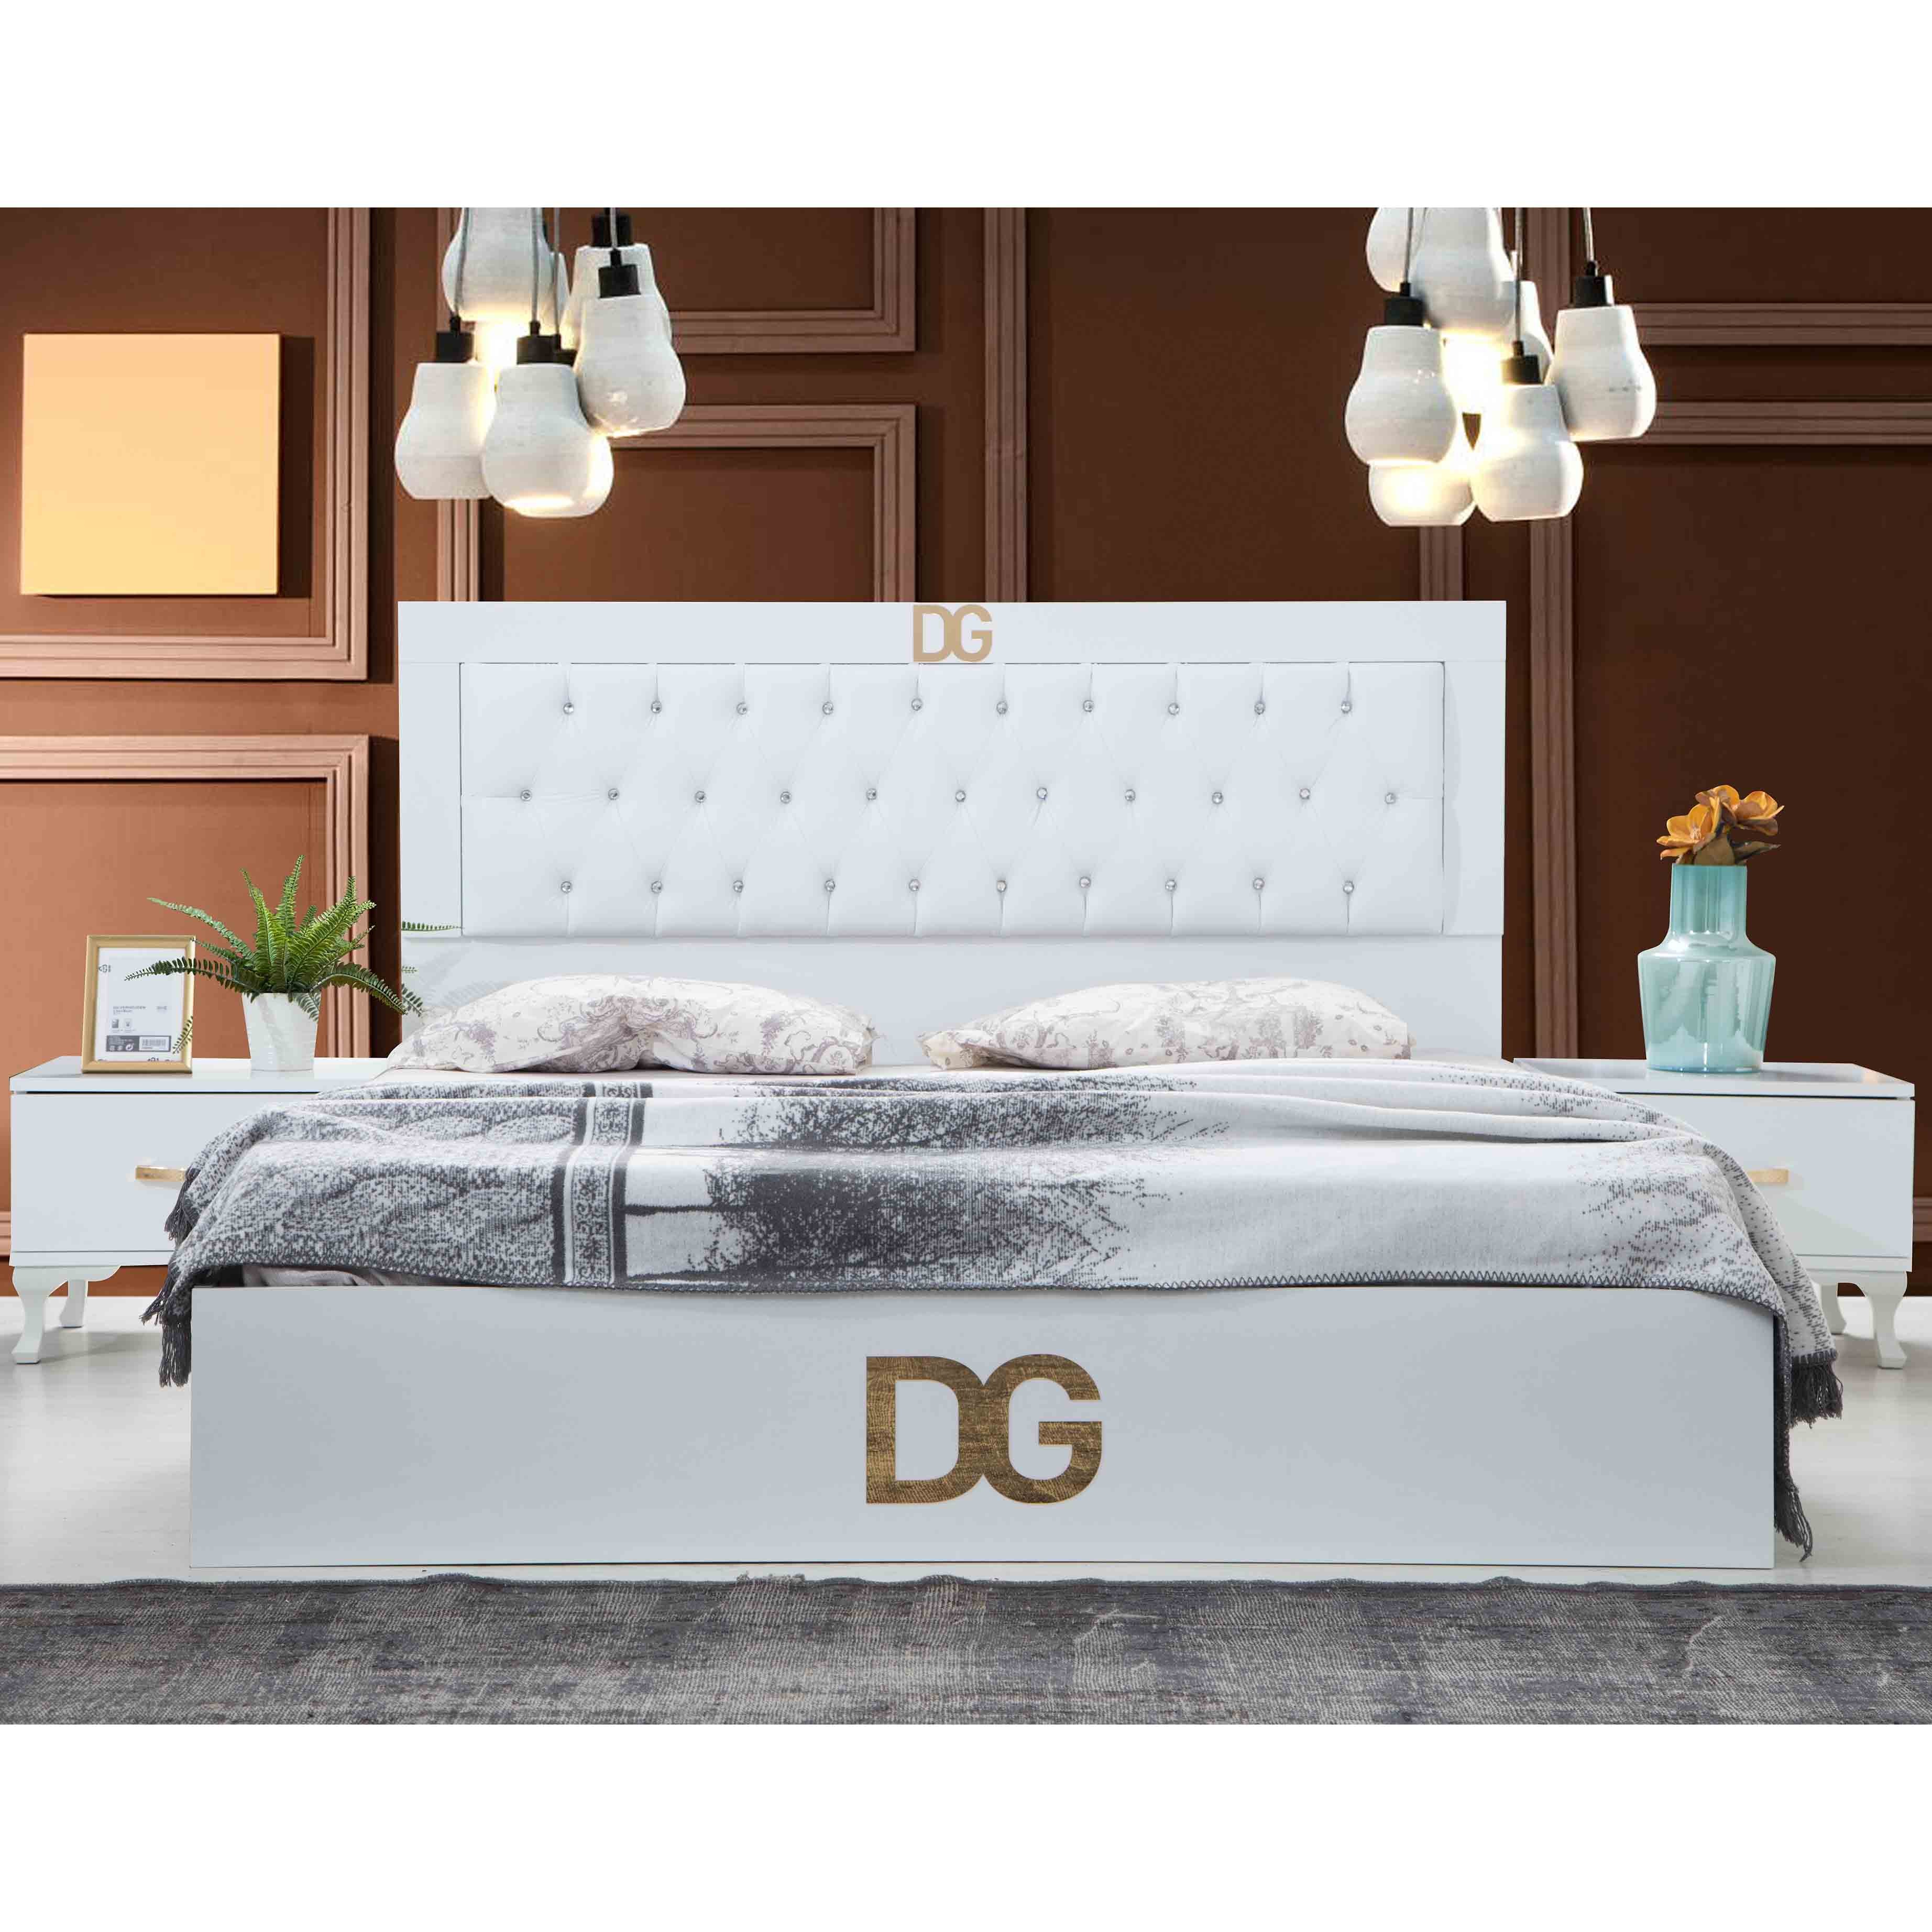 Dg Vol1 Bed With Storage 180x200 cm